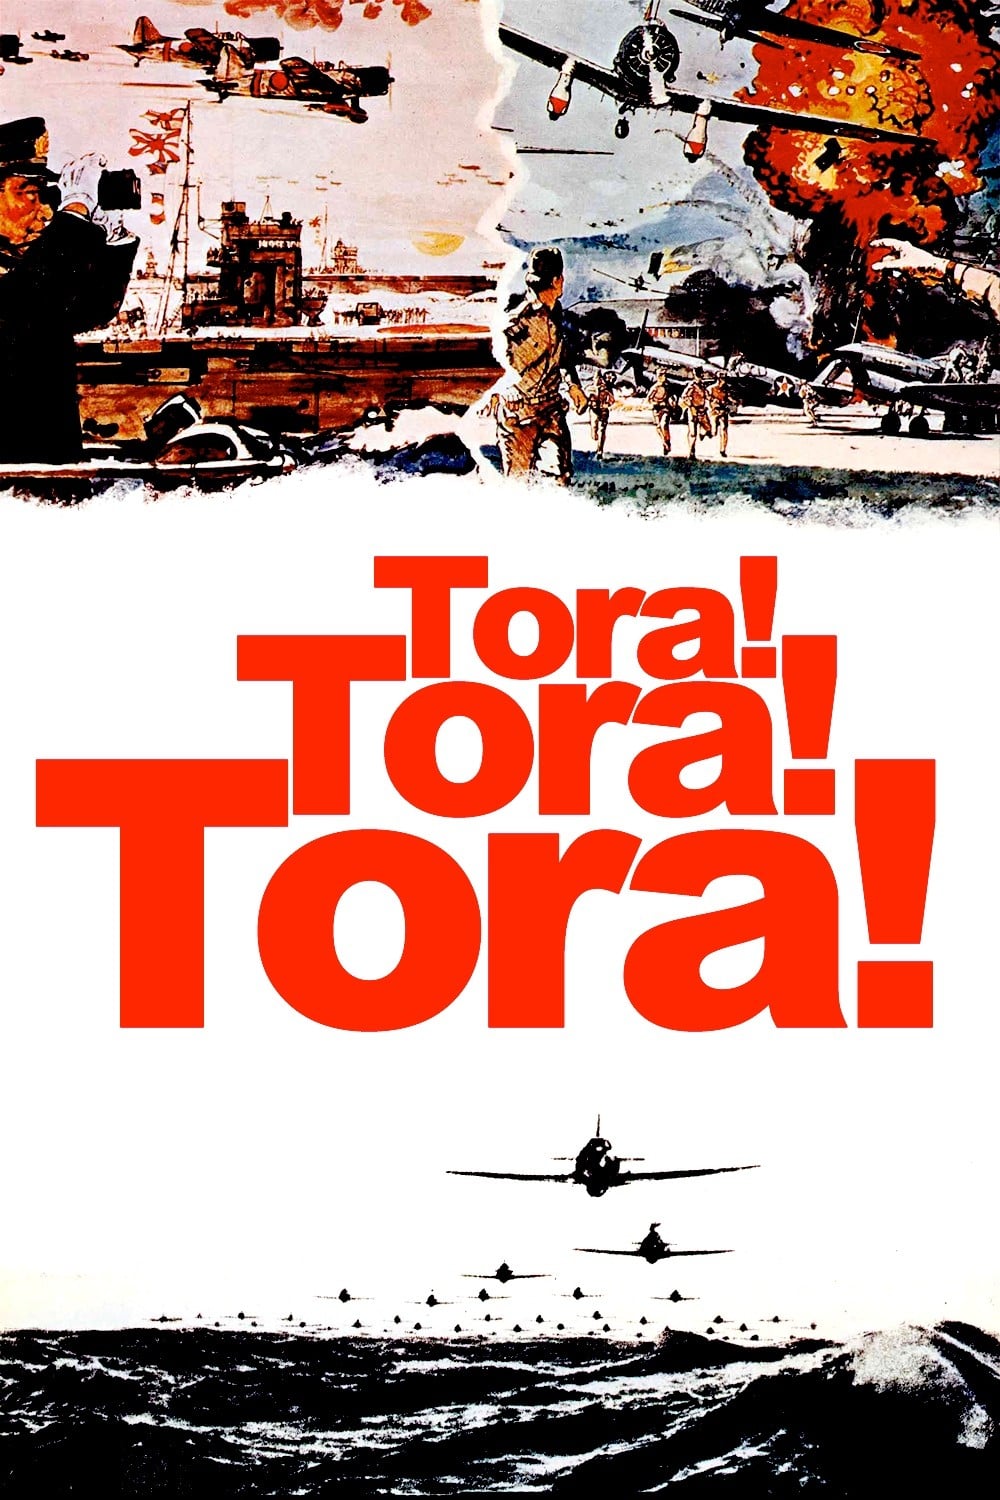 Poster for the movie "Tora! Tora! Tora!"